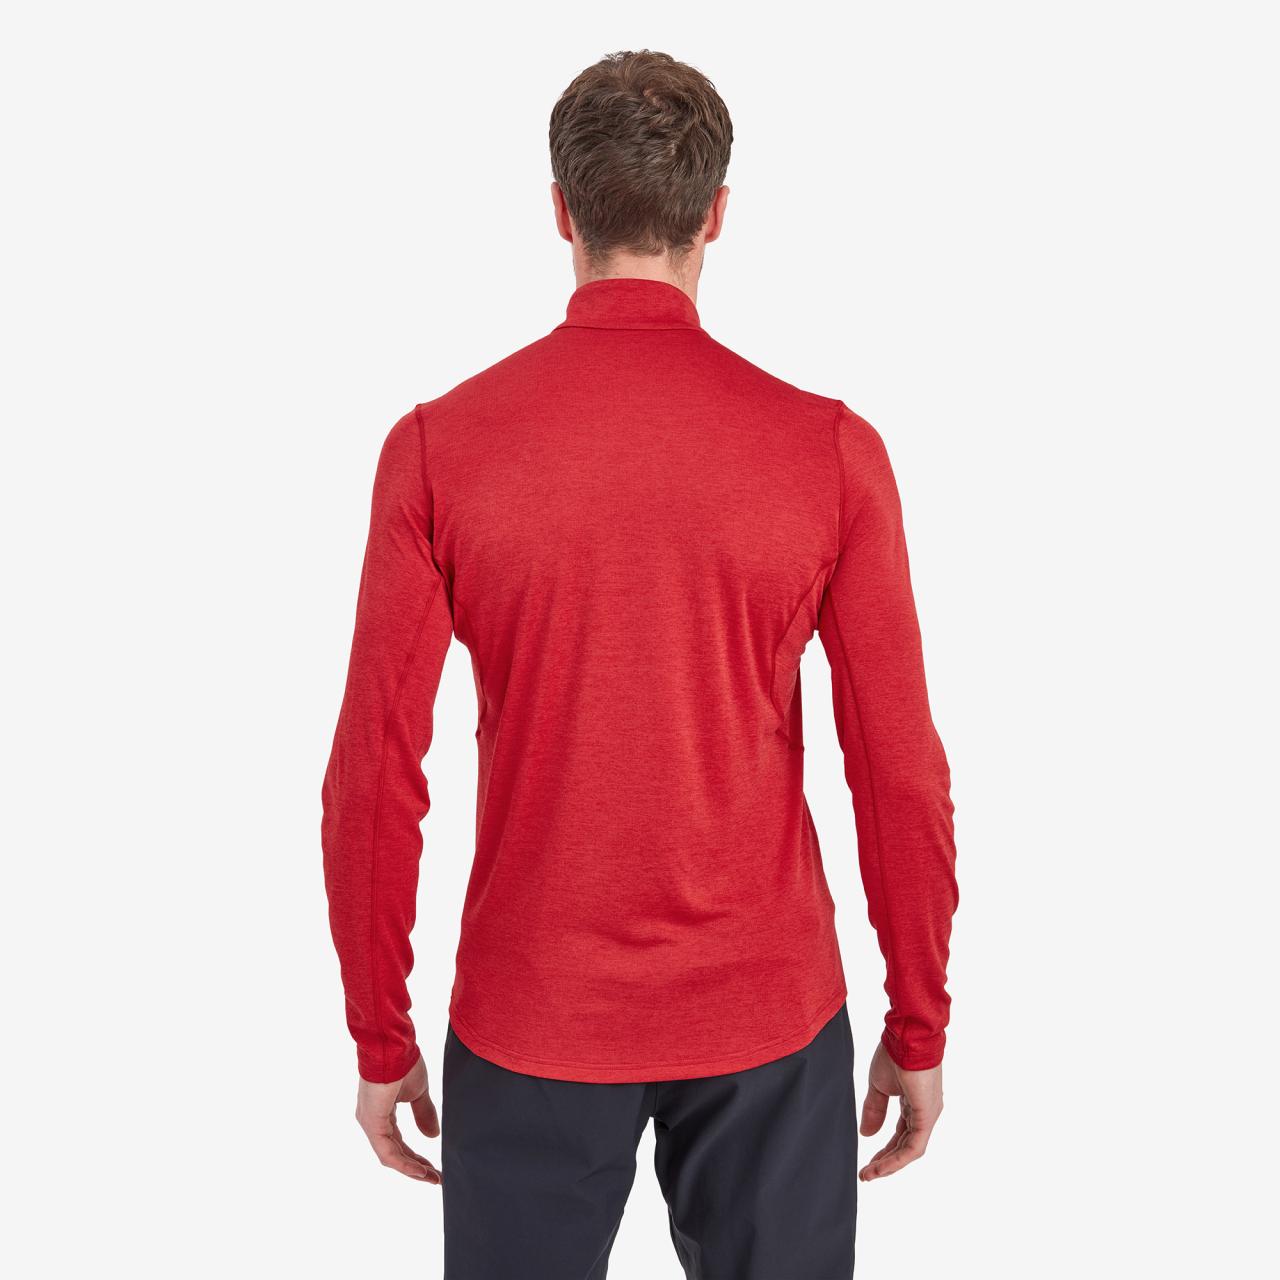 DART ZIP NECK-ACER RED-XL pánské triko tmavě červené